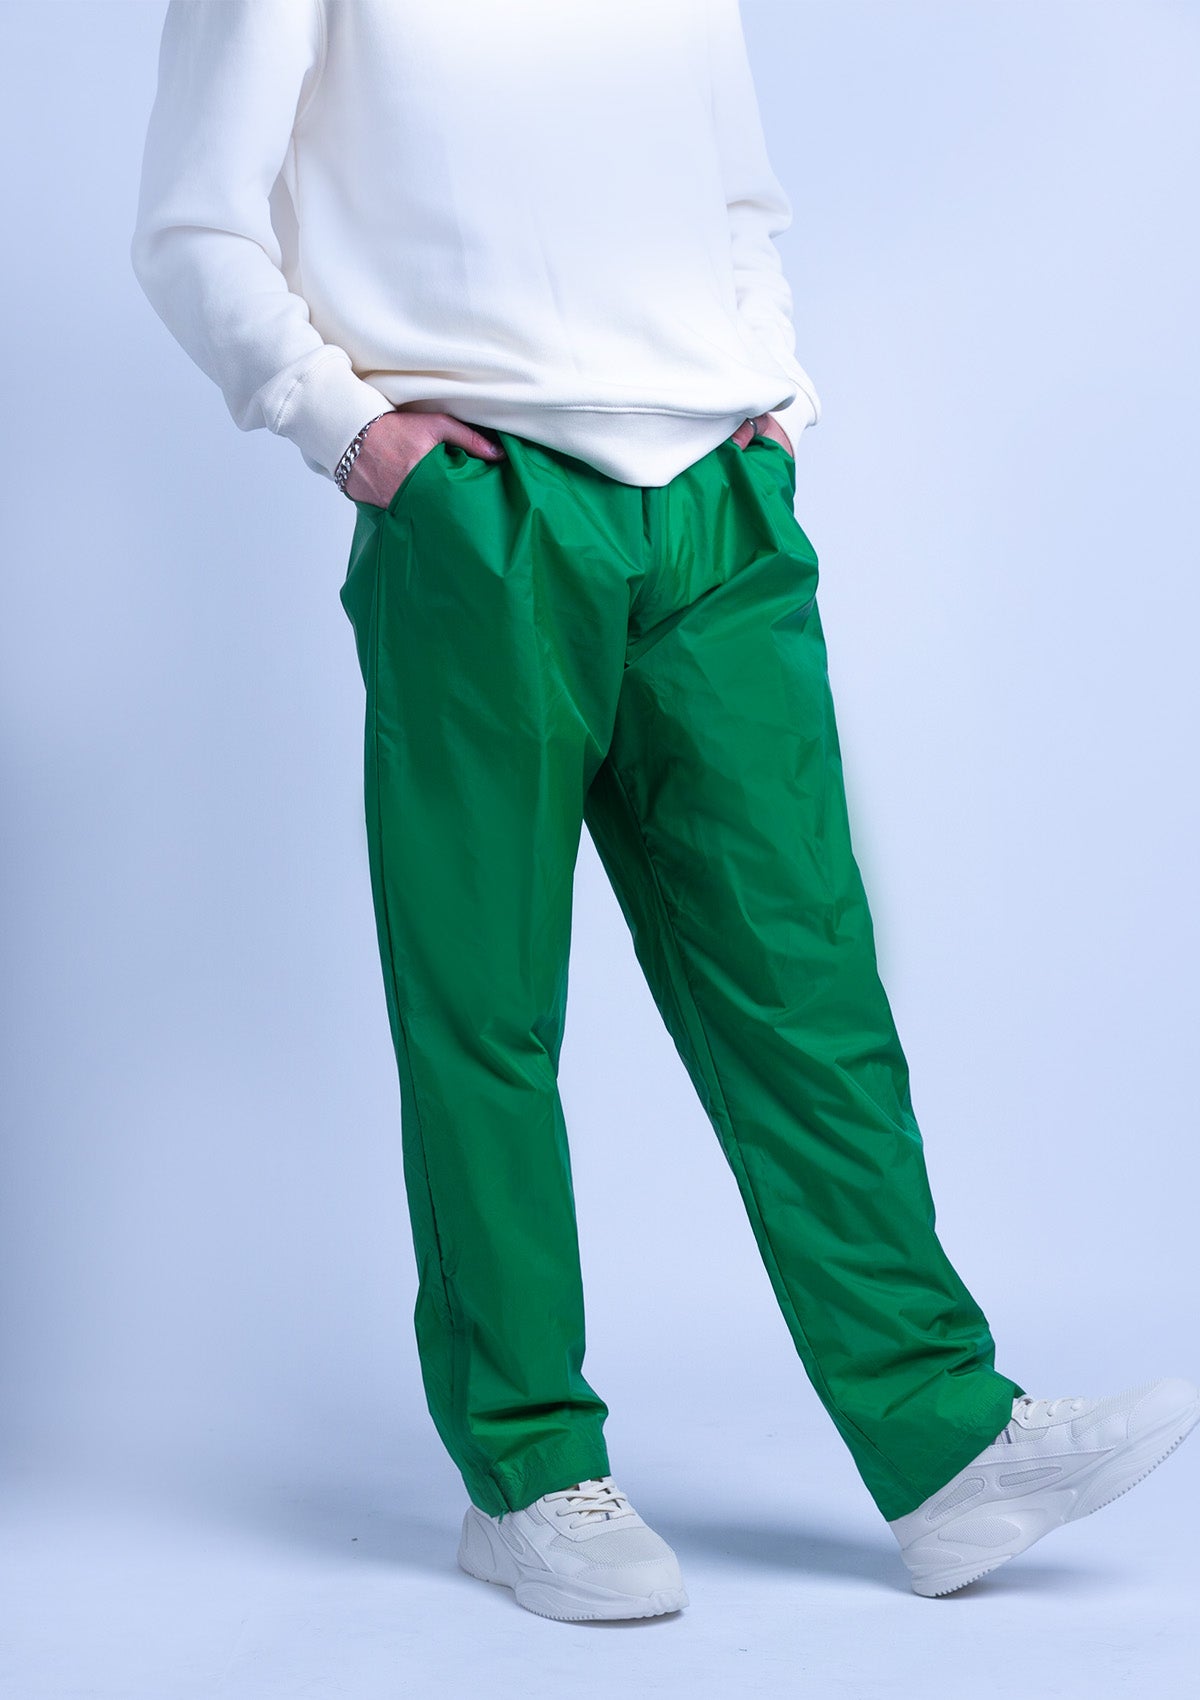 Green Sweatpants Pants Women | Women's Green Sports Pants | Pants Women  Stripes Green - Pants & Capris - Aliexpress